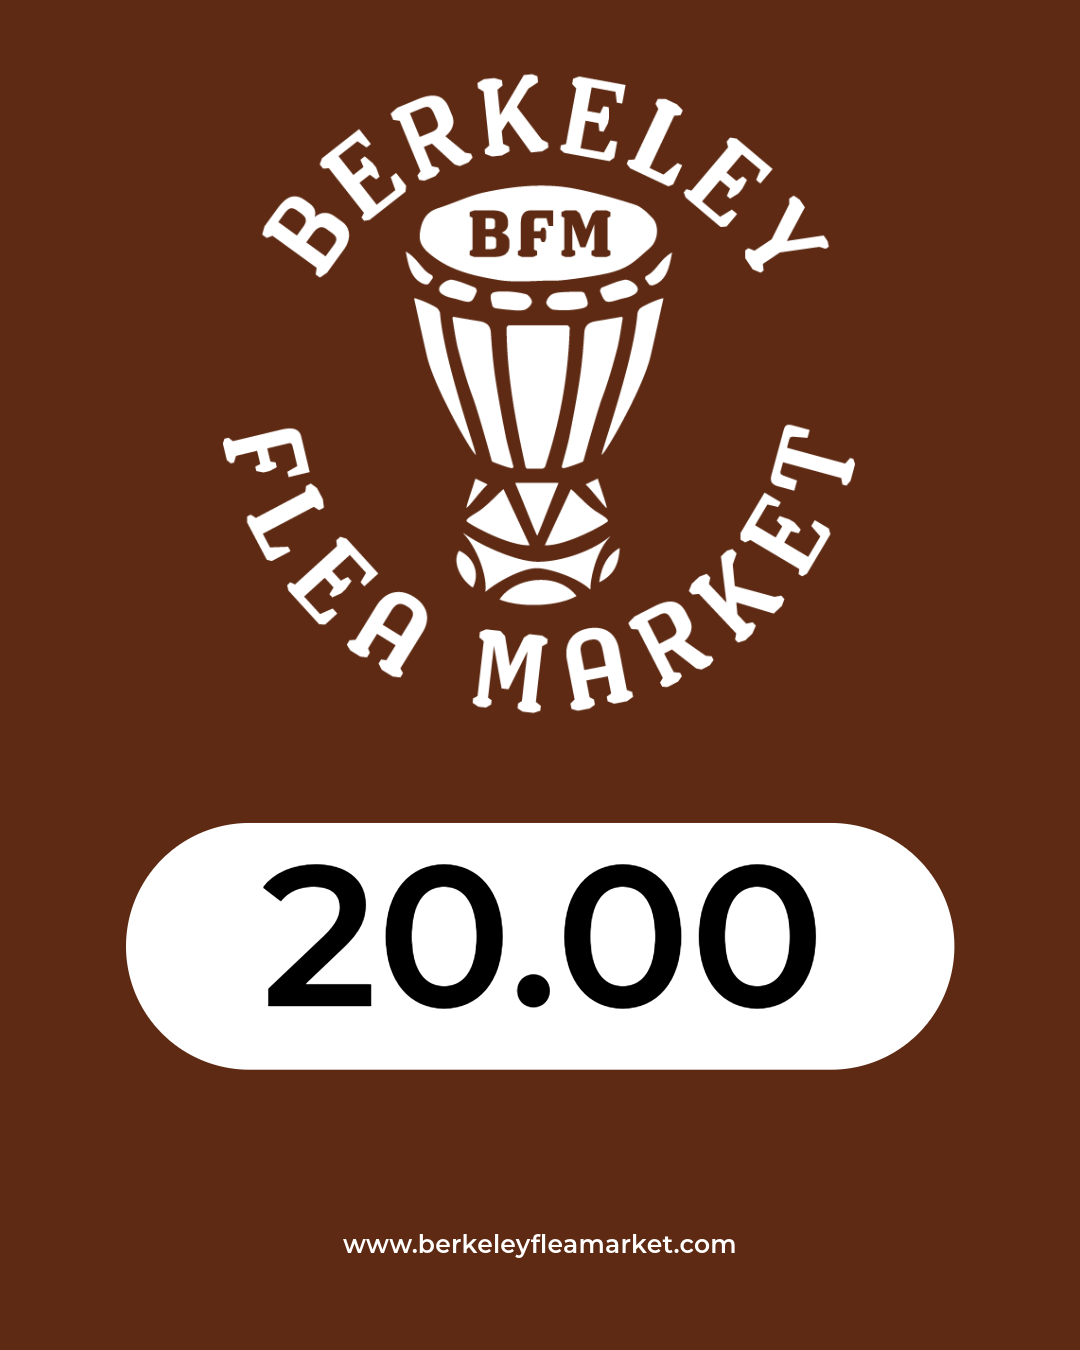 donate 20.00 to berkeley flea market